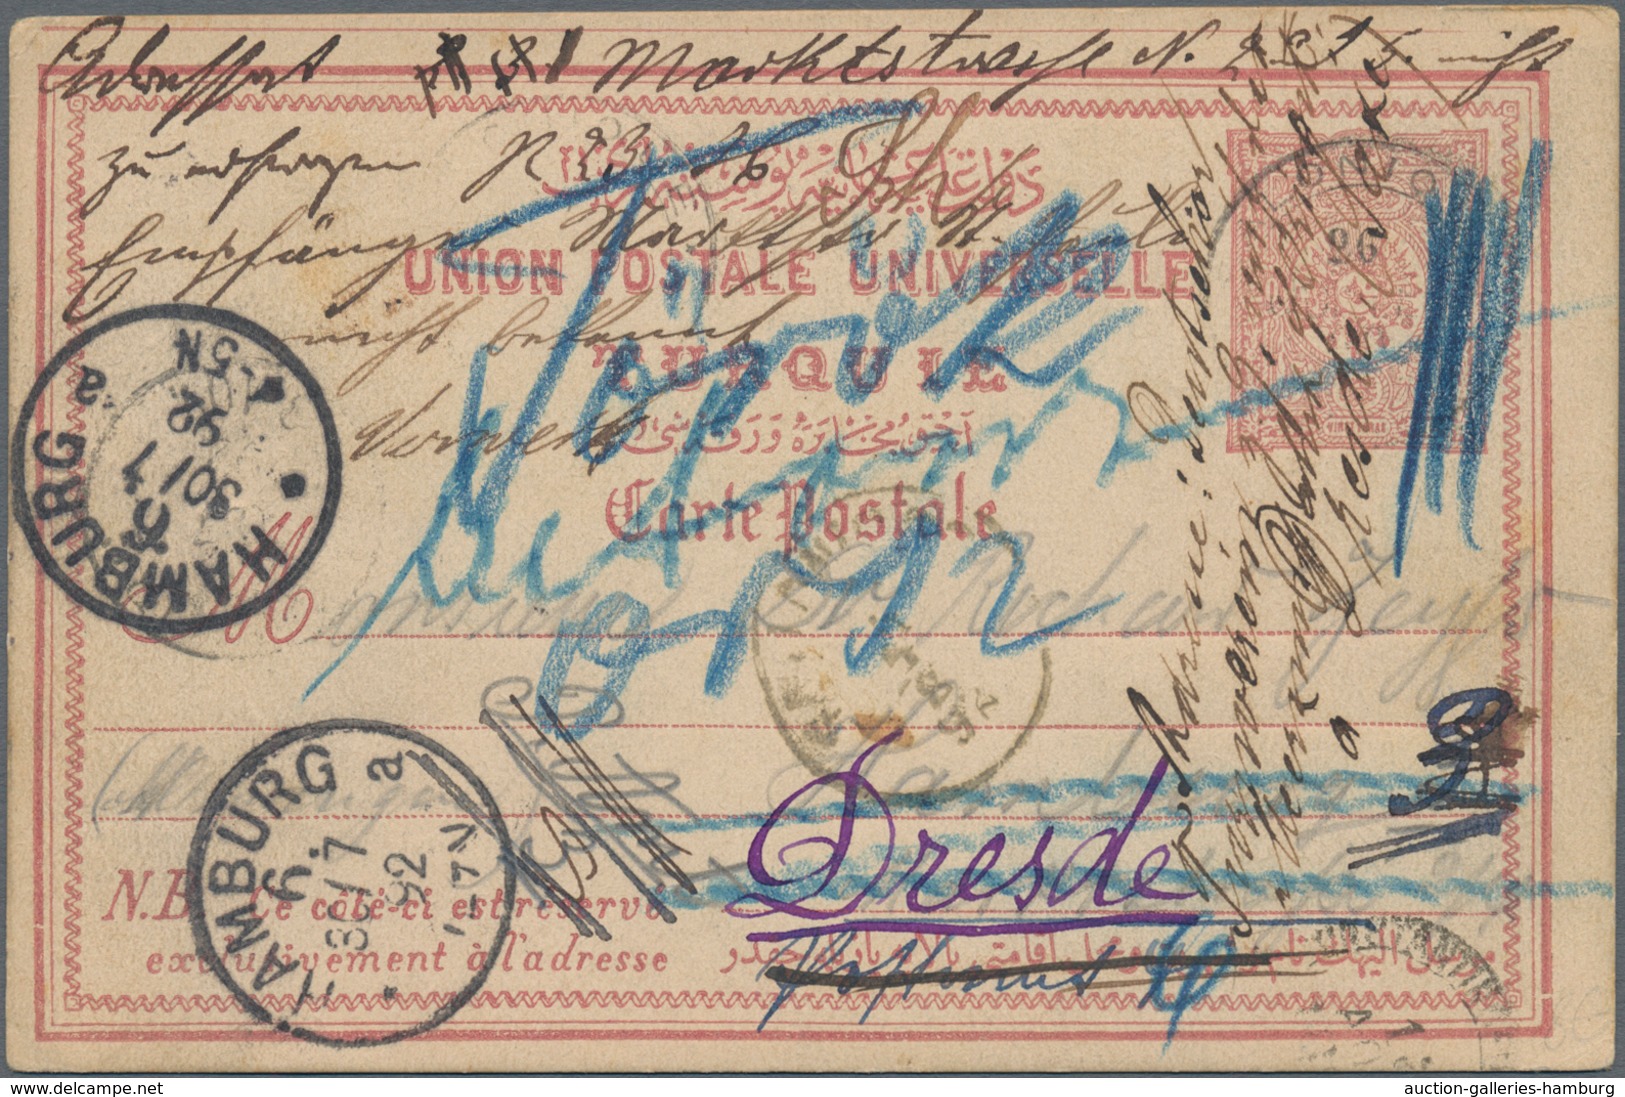 Griechenland - Stempel: 1892, Turkey 20 Para Postal Stationery Card Tied By "SALONIQUE TURQUIE" Cds. - Postmarks - EMA (Printer Machine)